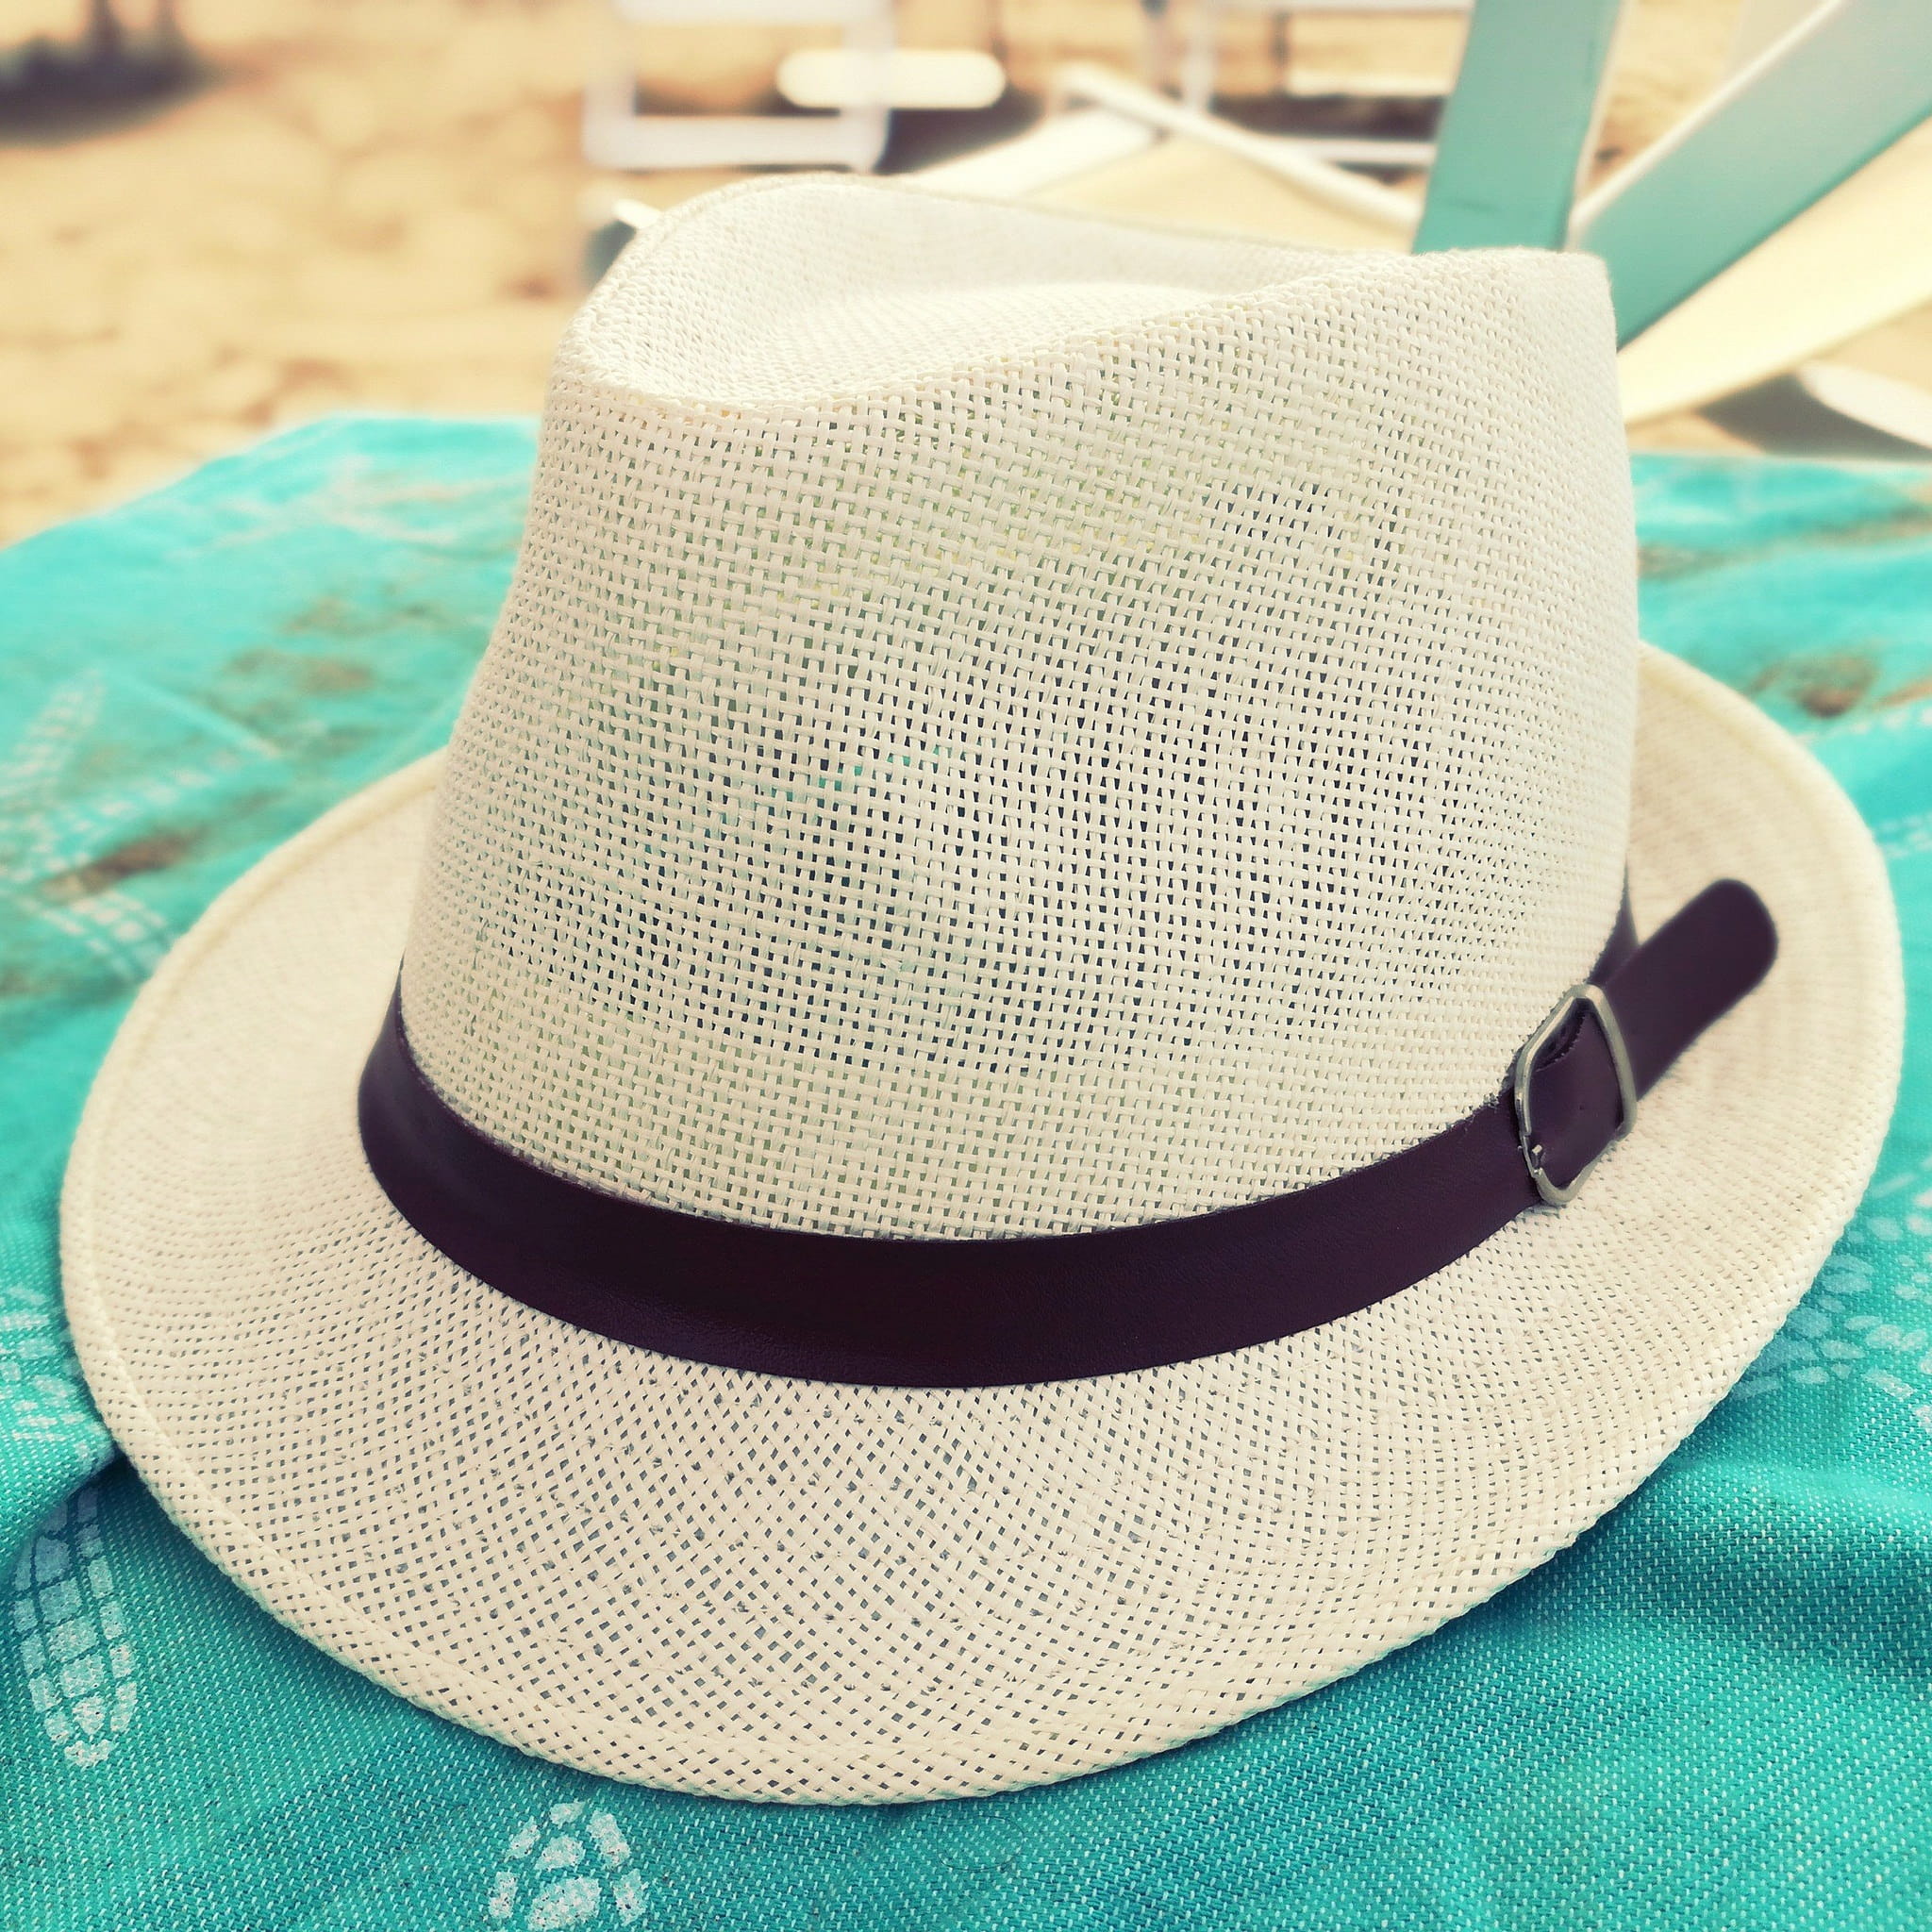 Hat, Beach, Sun, Sea, Chairs, Sarong, towel, sand, holidays